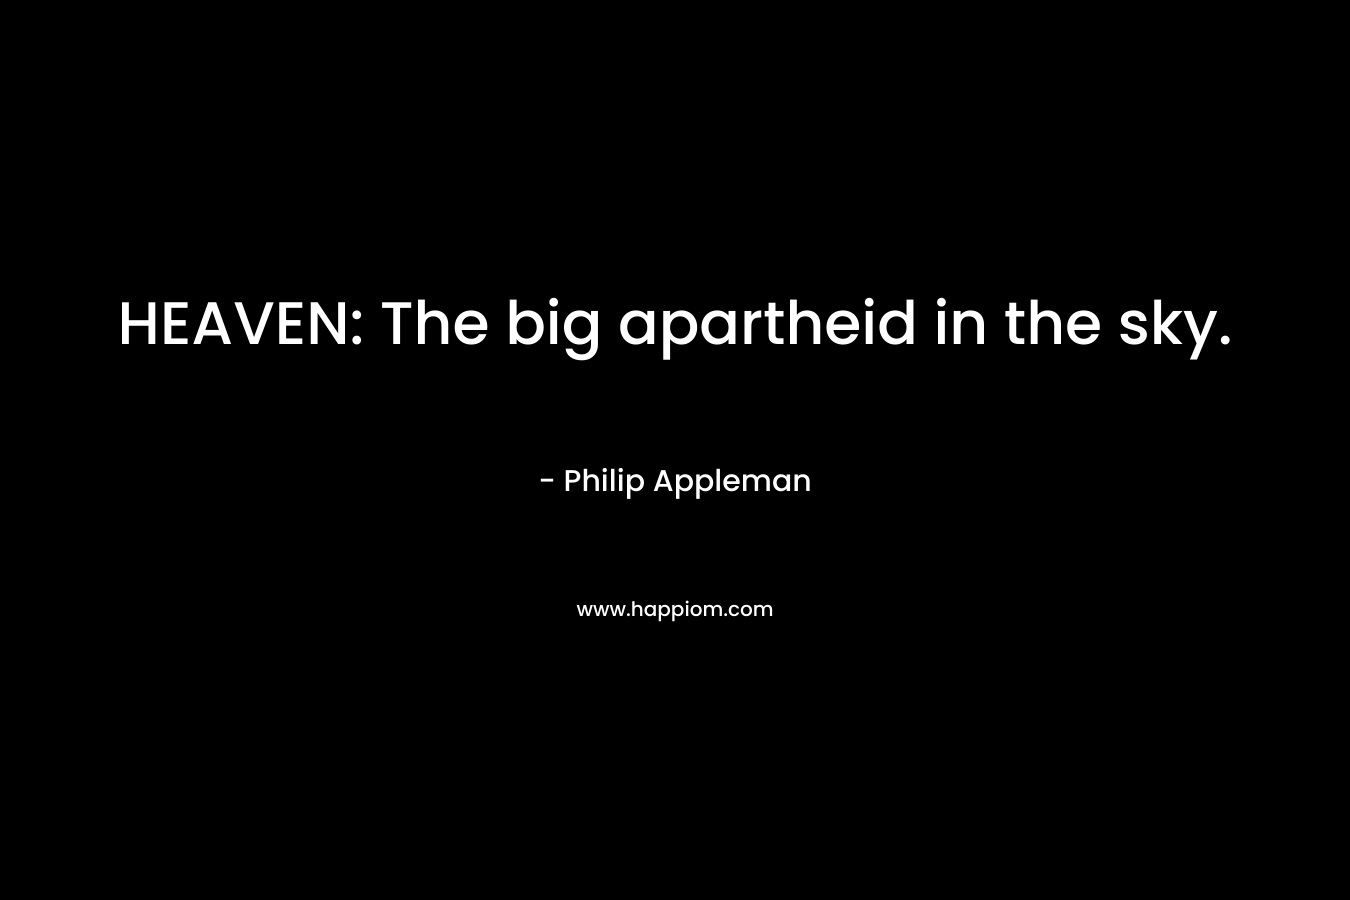 HEAVEN: The big apartheid in the sky.